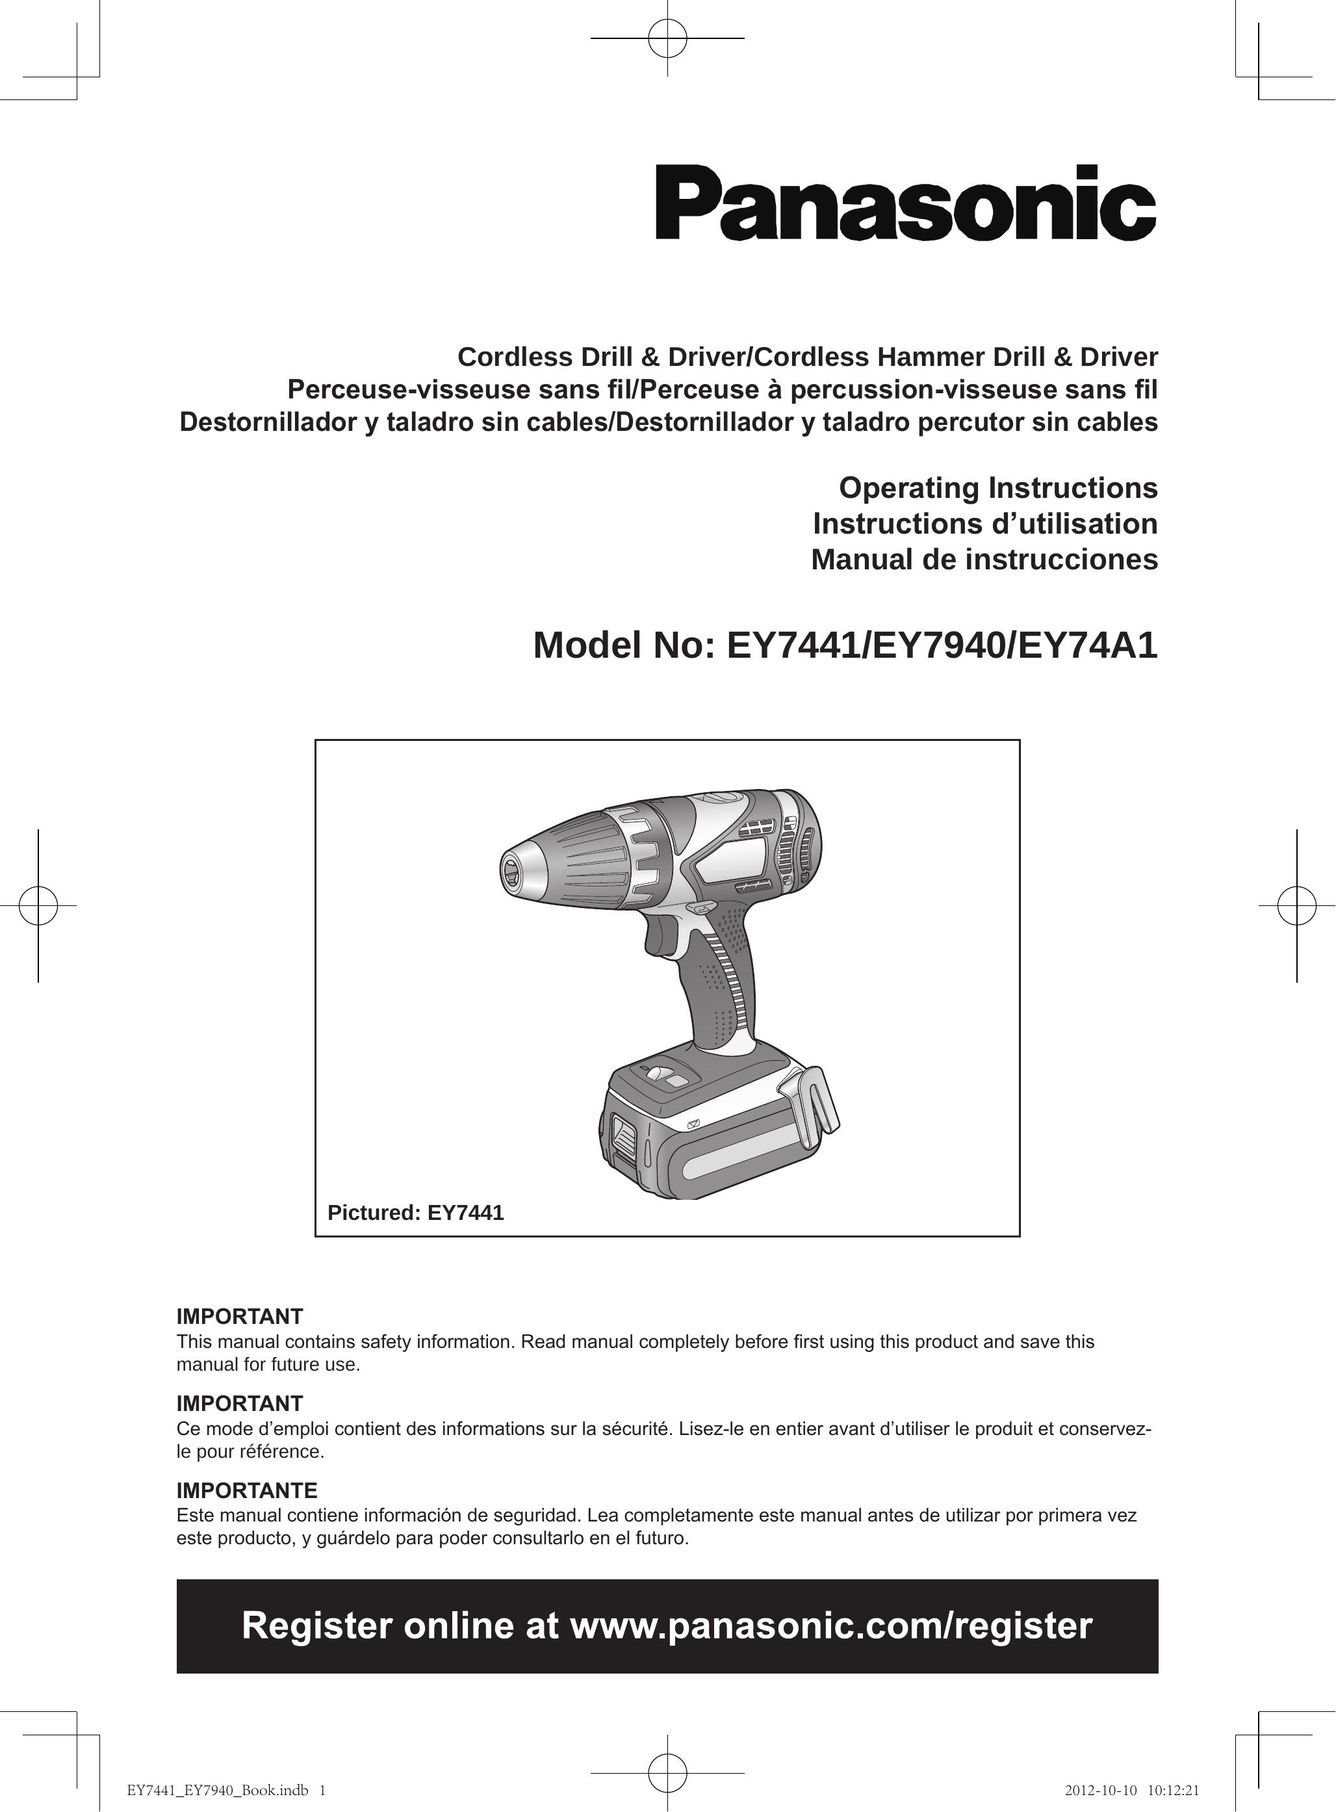 Panasonic EY7940 Cordless Drill User Manual